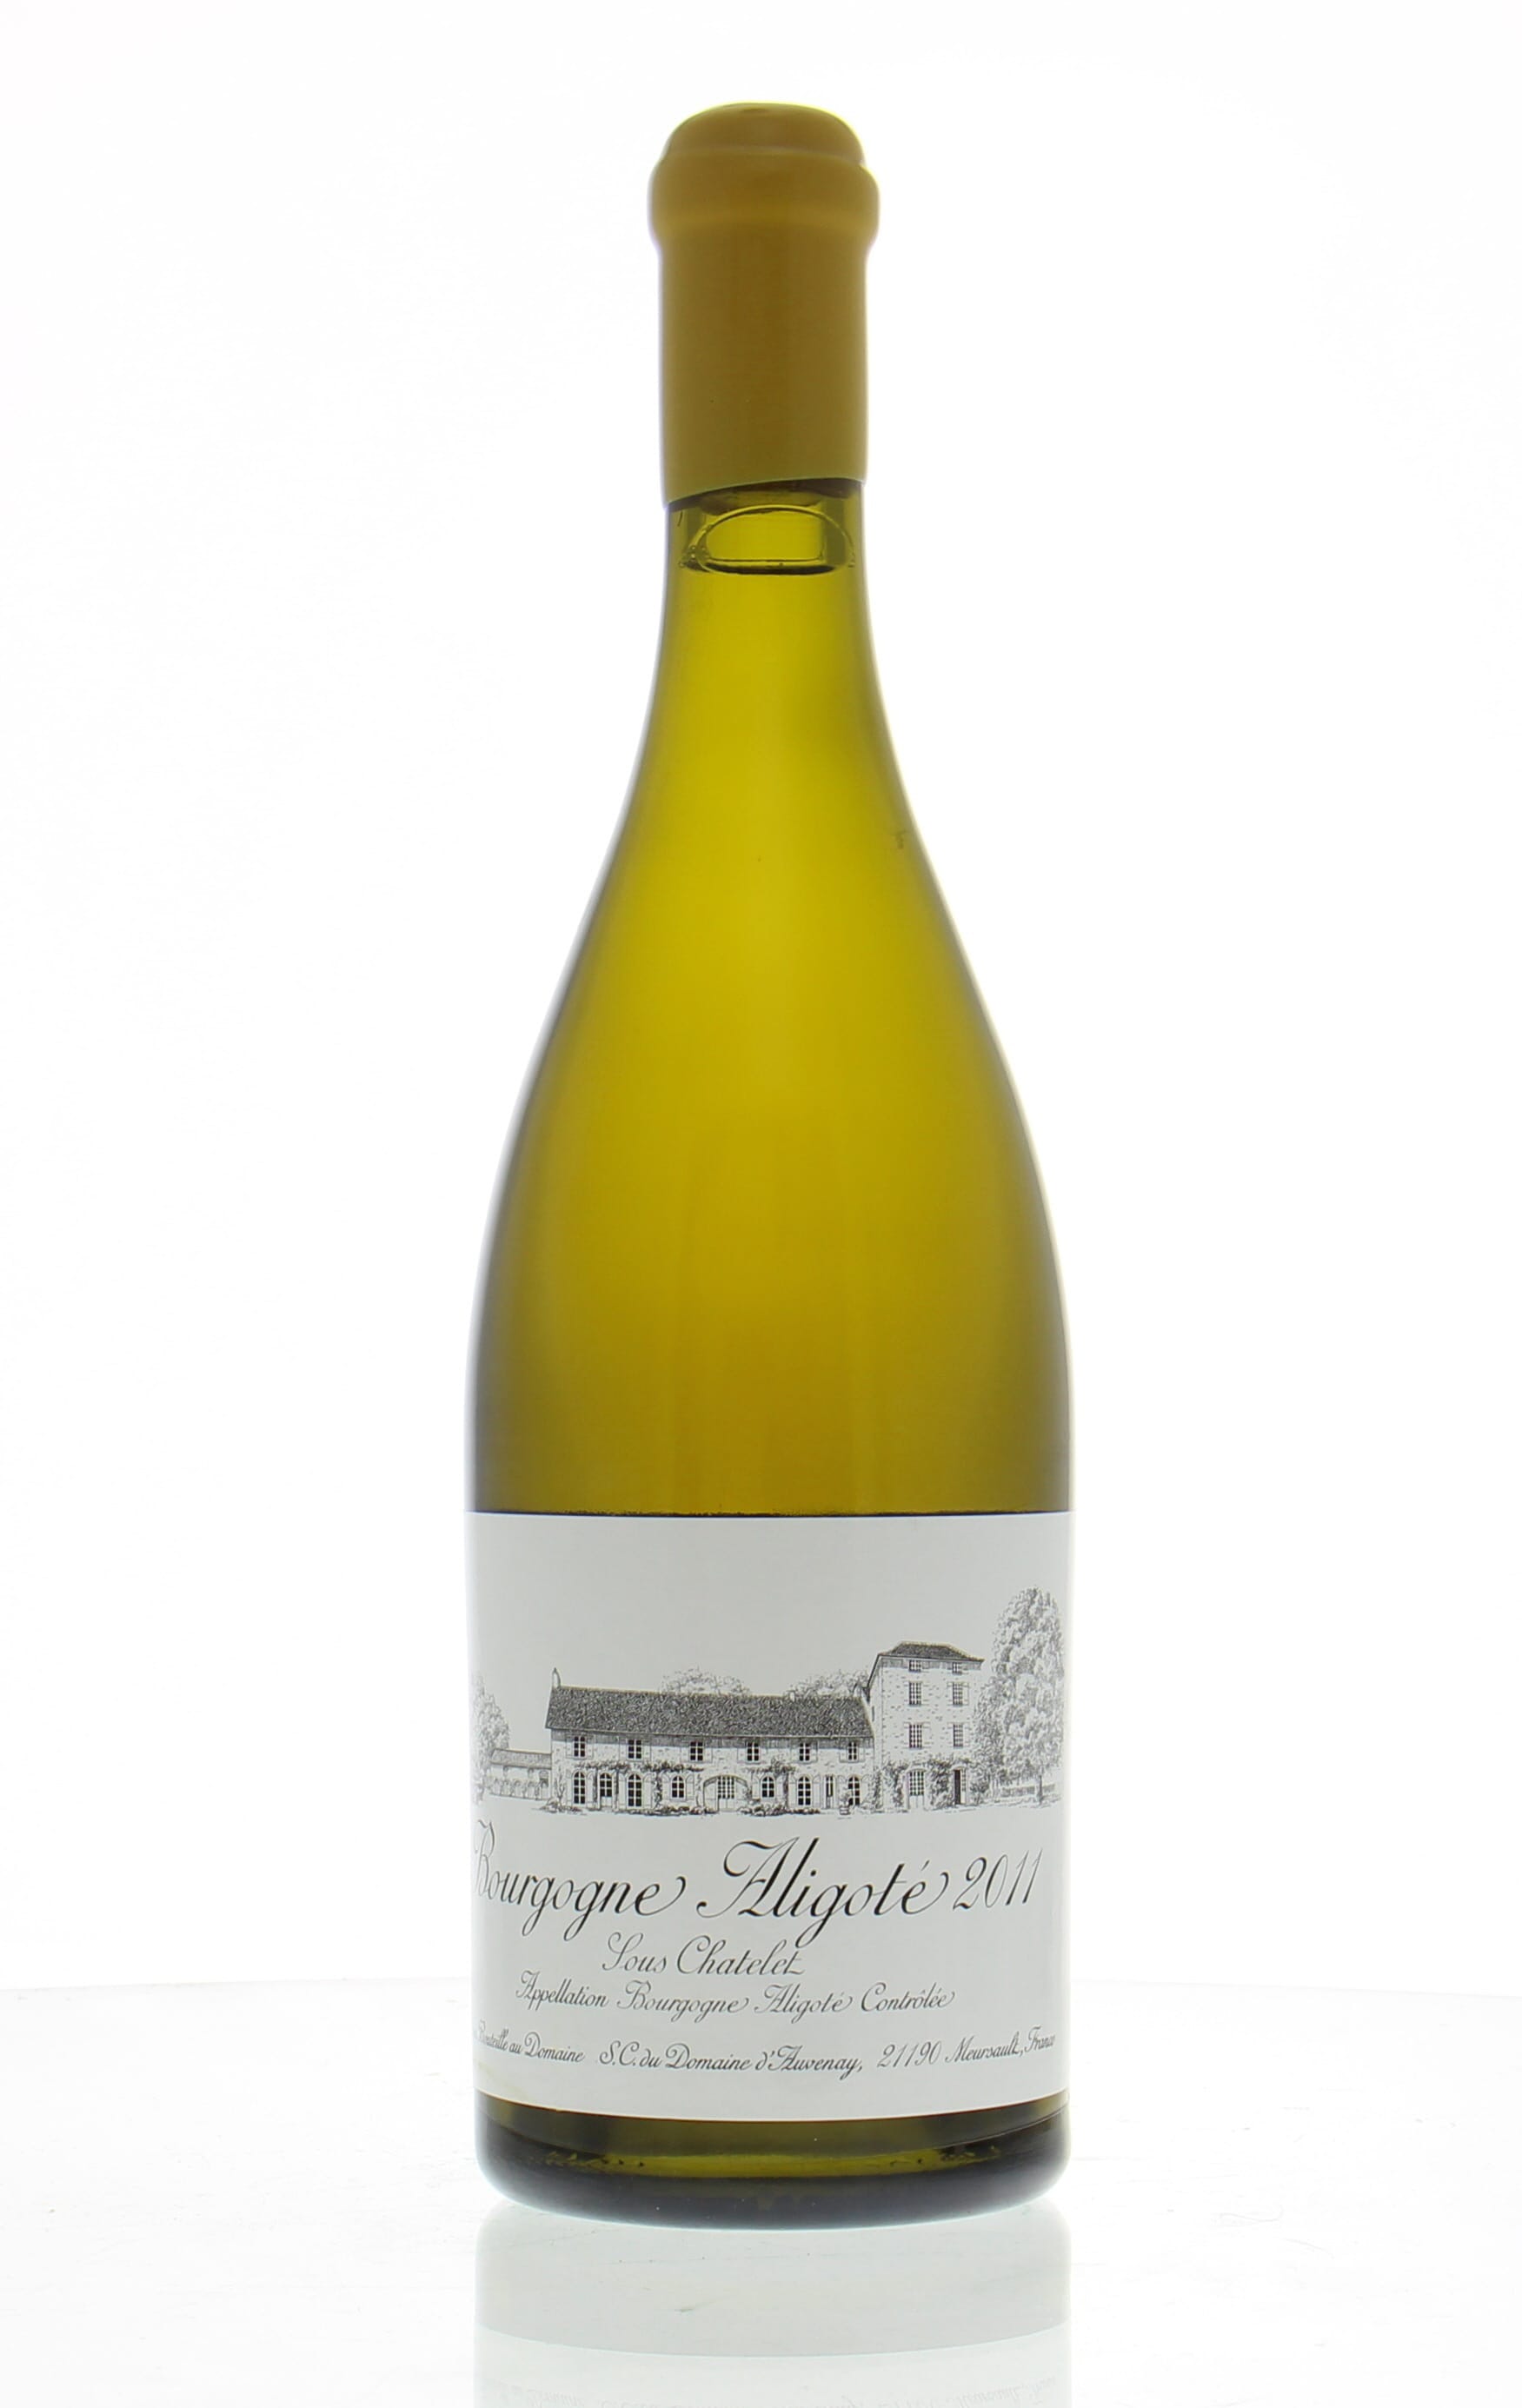 Aligote Sous Chatelet 2011 - Domaine d'Auvenay | Buy Online | Best of Wines